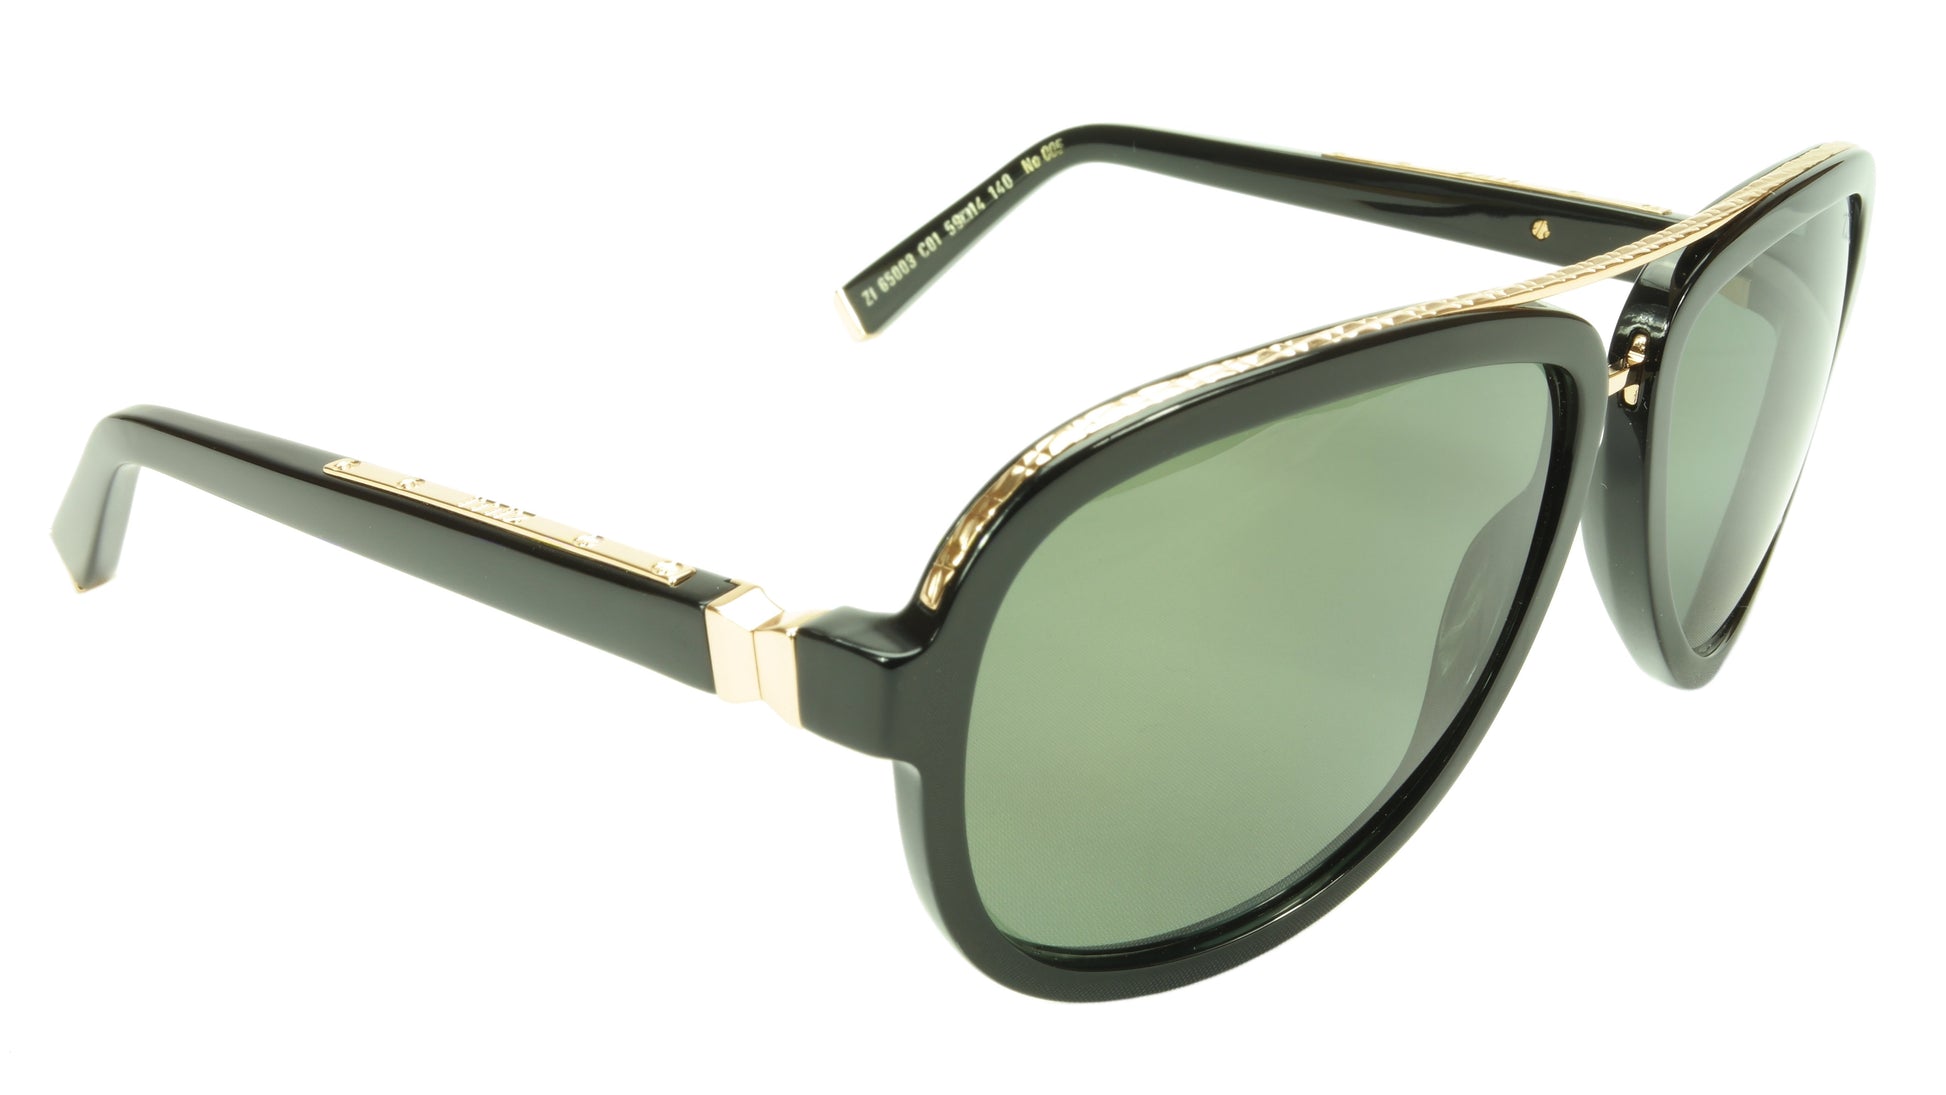 ZILLI Sunglasses Polarized Hand Made Acetate Titanium France ZI 65003 C01 - Frame Bay